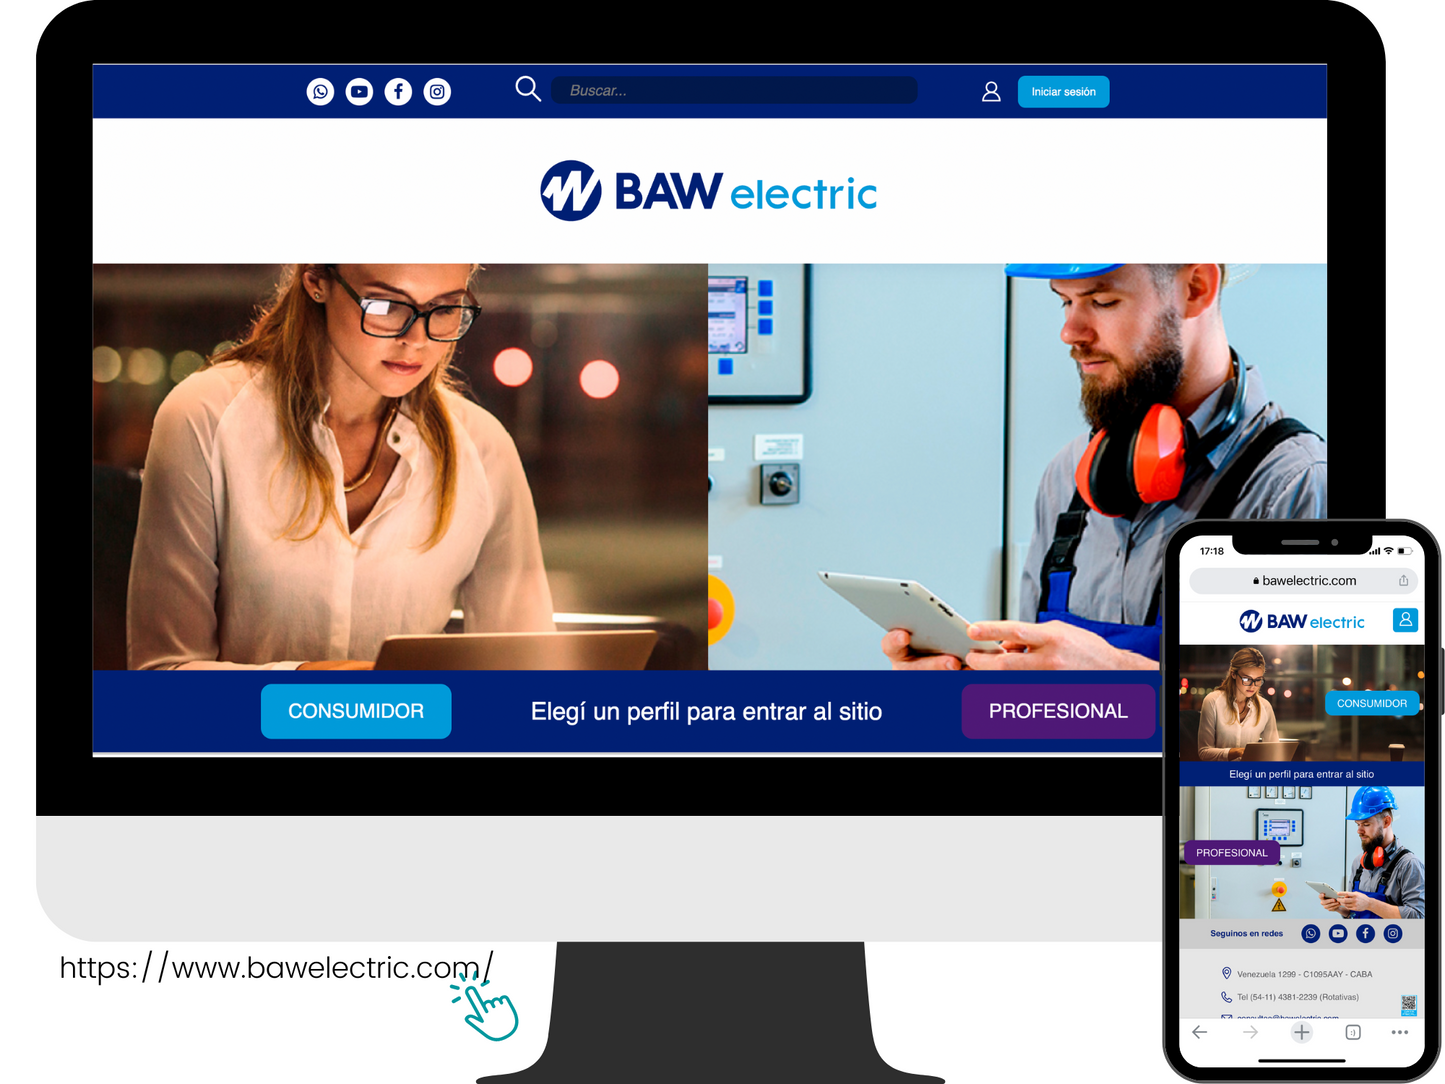 BAW Electric: Corporate website - B2B Customer Portal